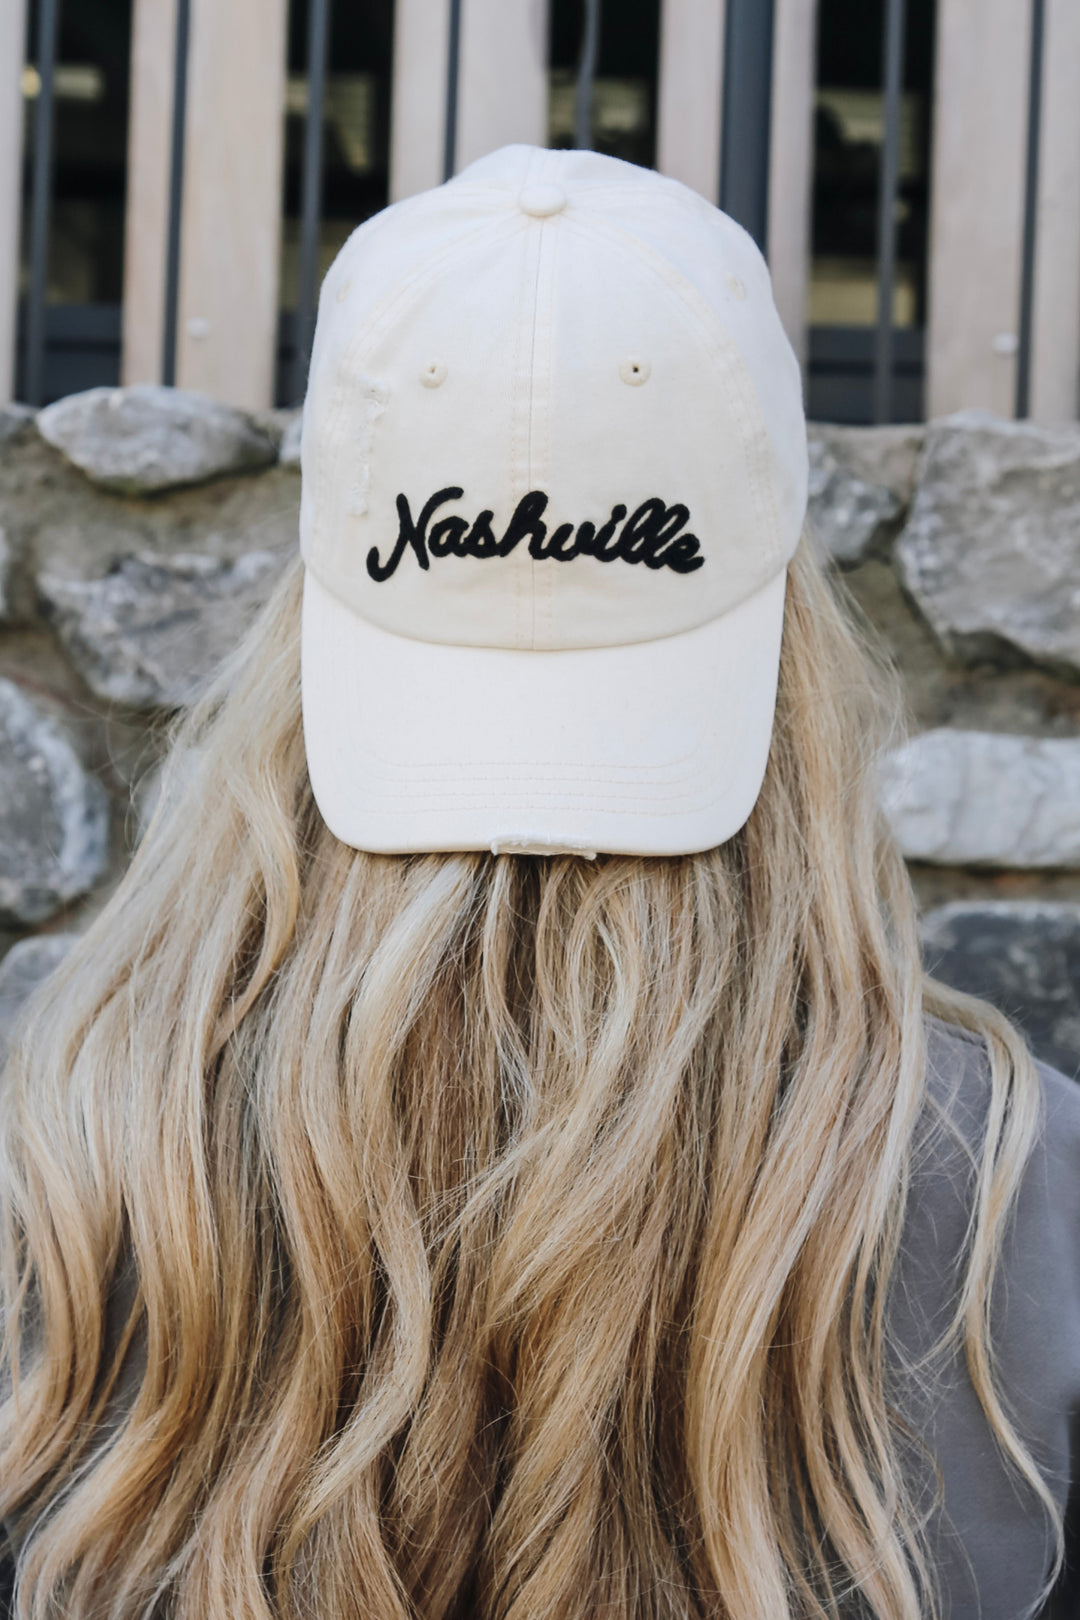 Nashville Distressed Ball Cap [Natural/Black]